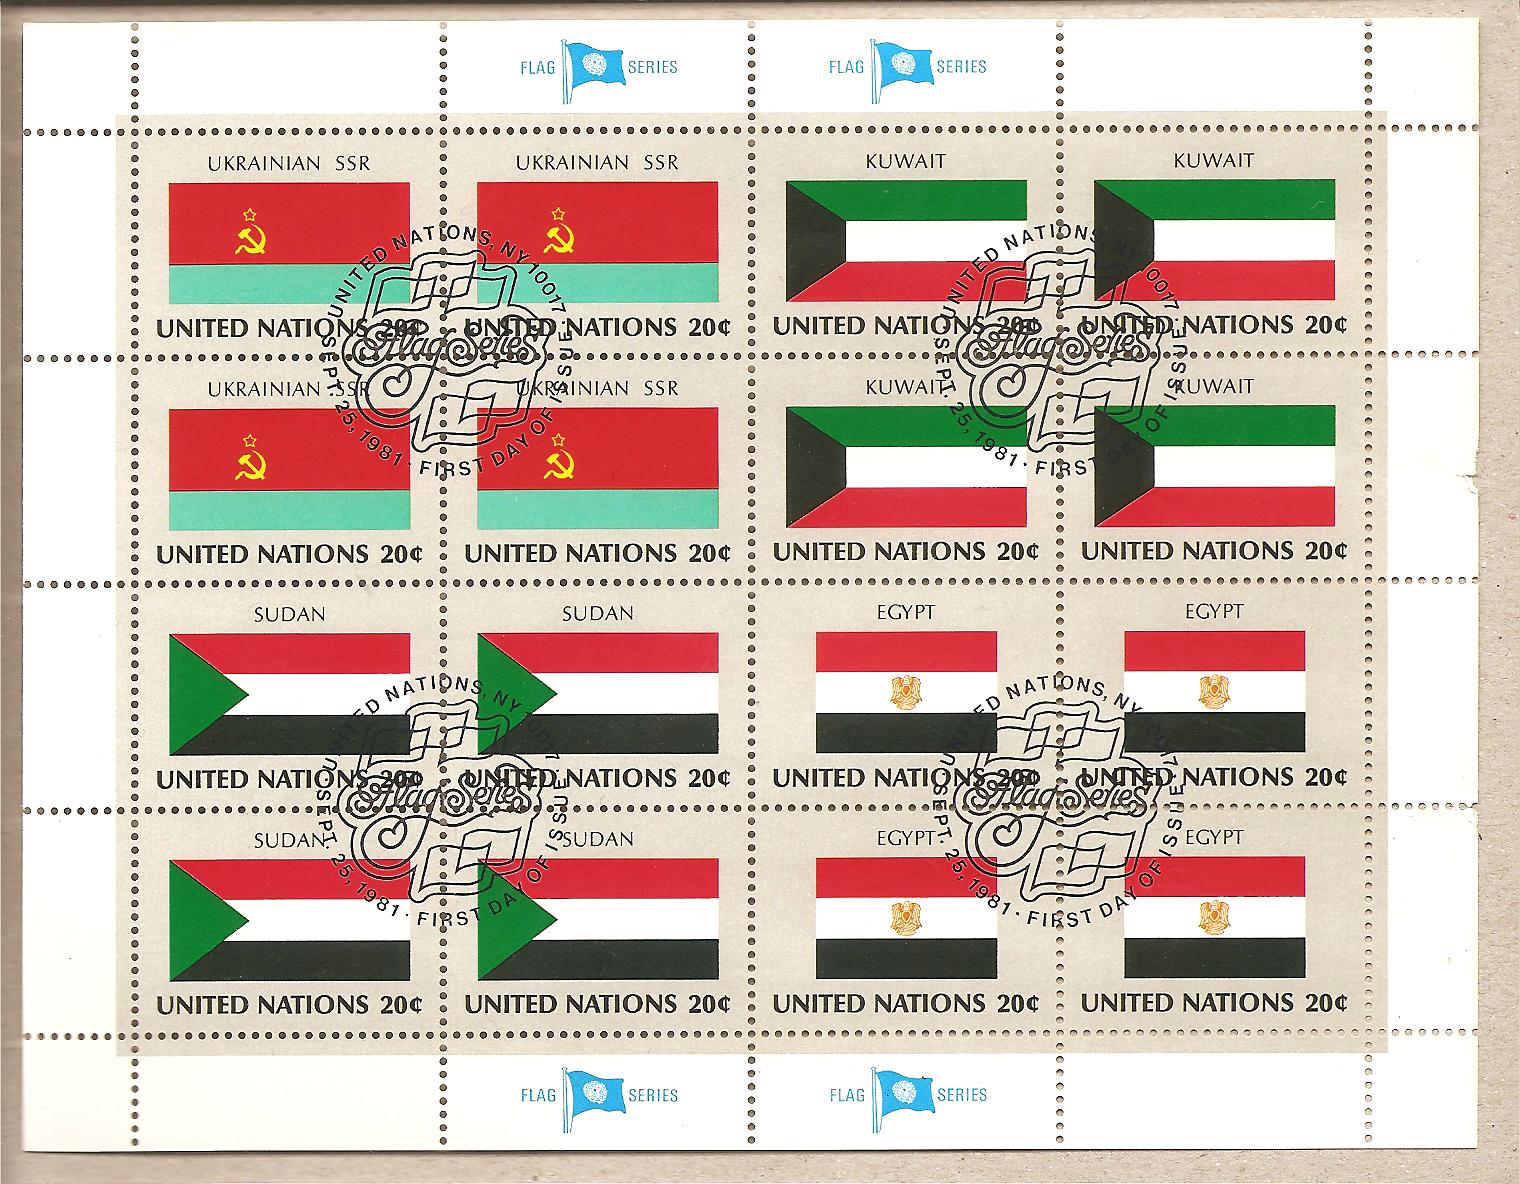 41155 - ONU New York - foglietto FDC serie bandiere: Ucraina, Kuwait, Sudan, Egitto - 1981